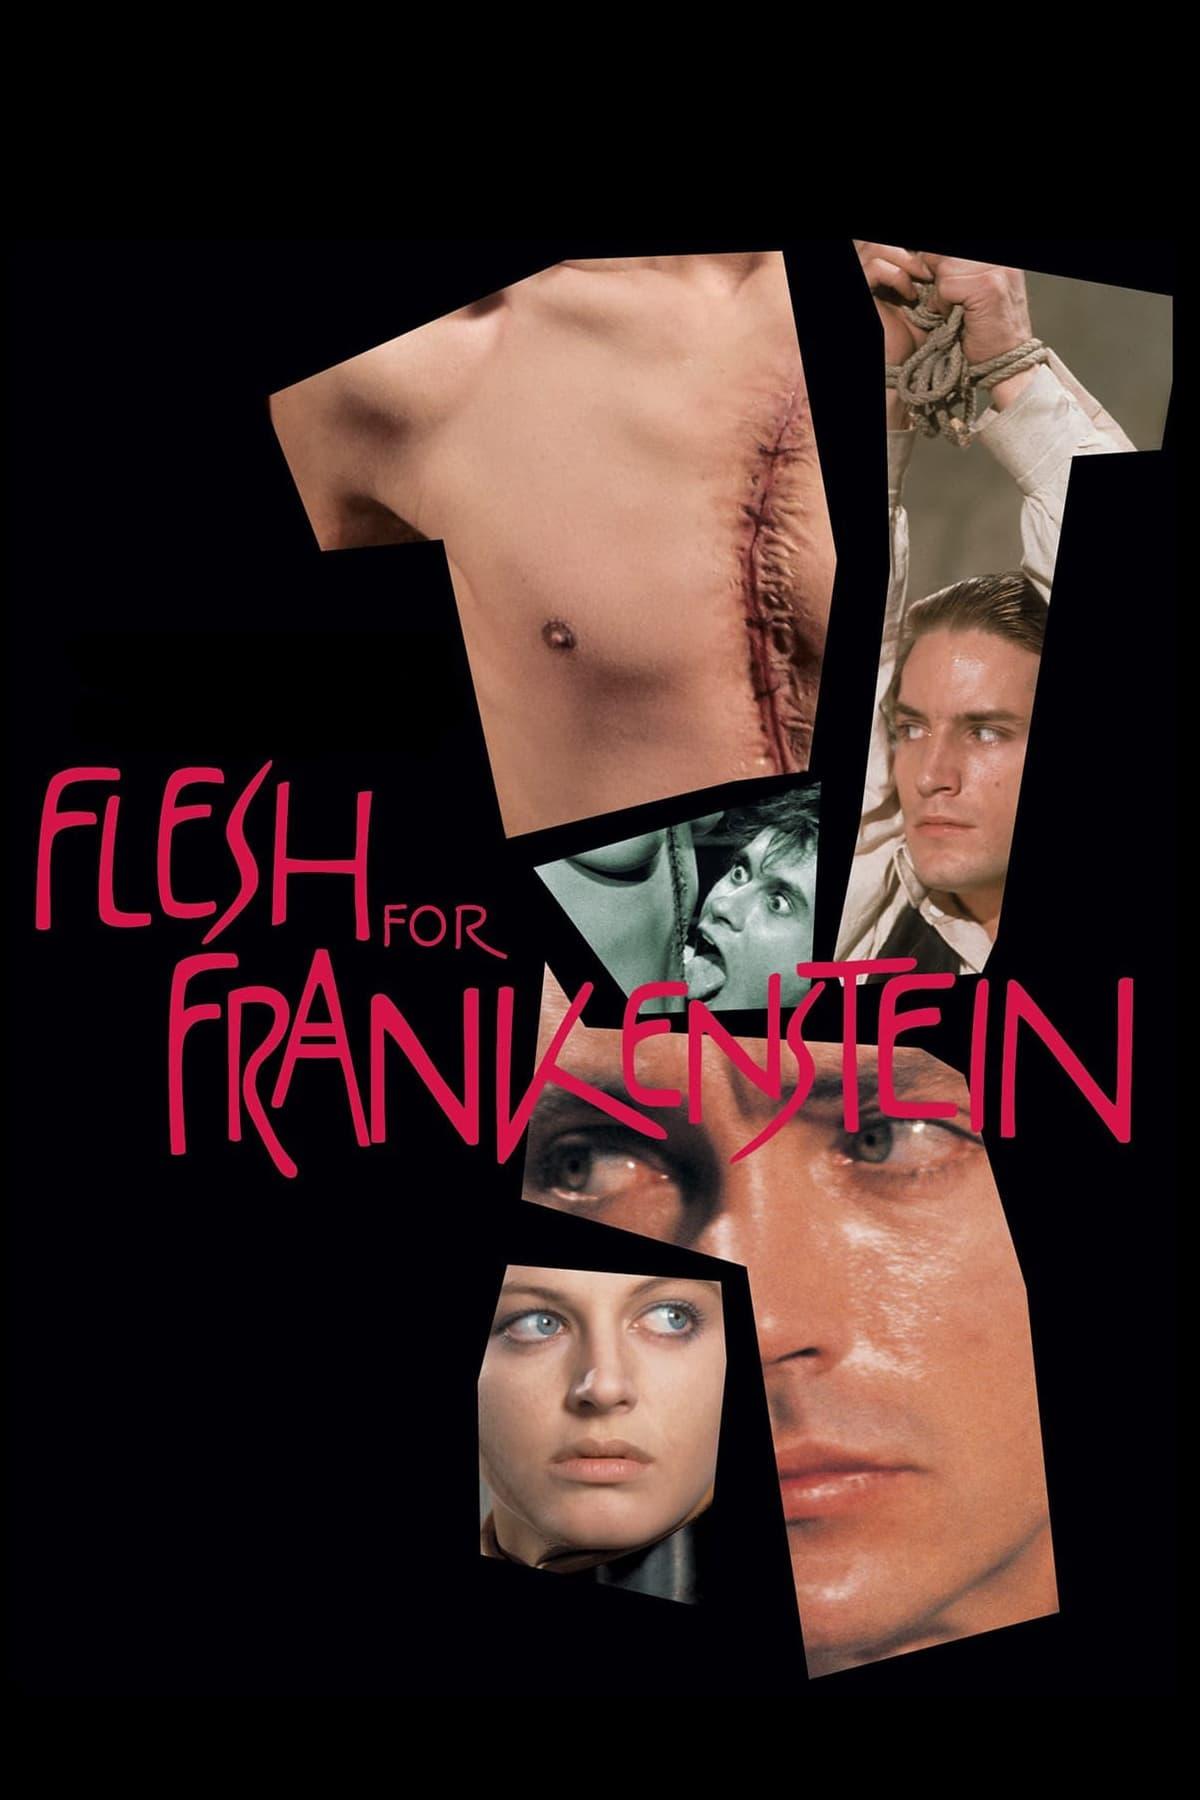 Andy Warhols Frankenstein poster